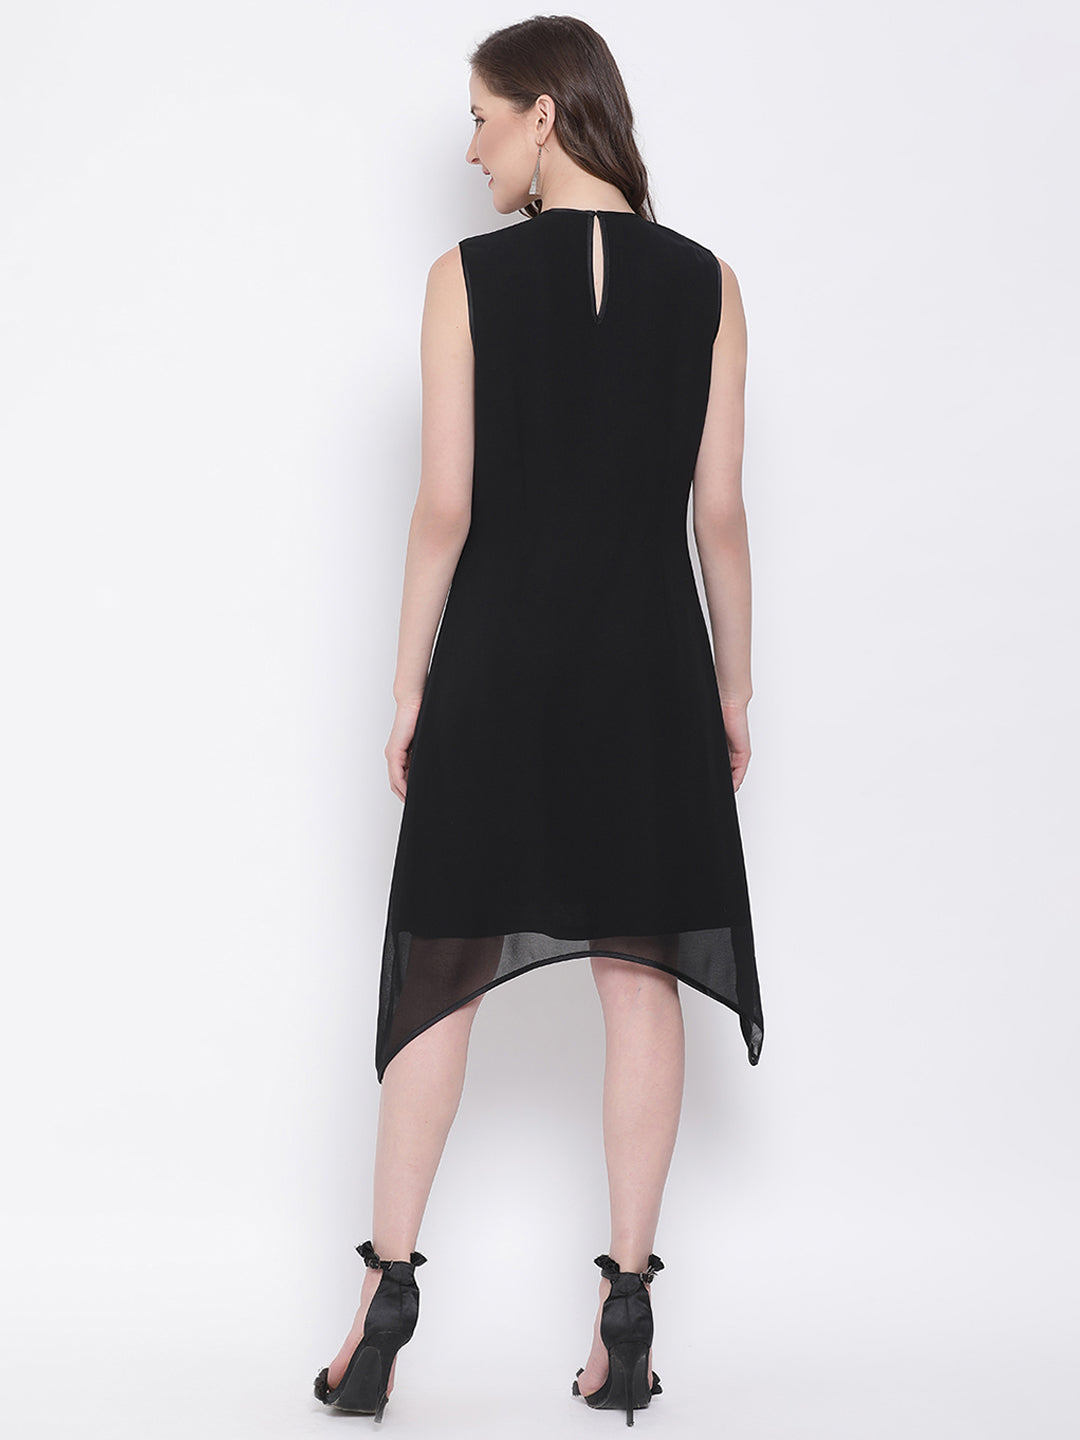 LY2 Embellish Detail Asymmetric Dress